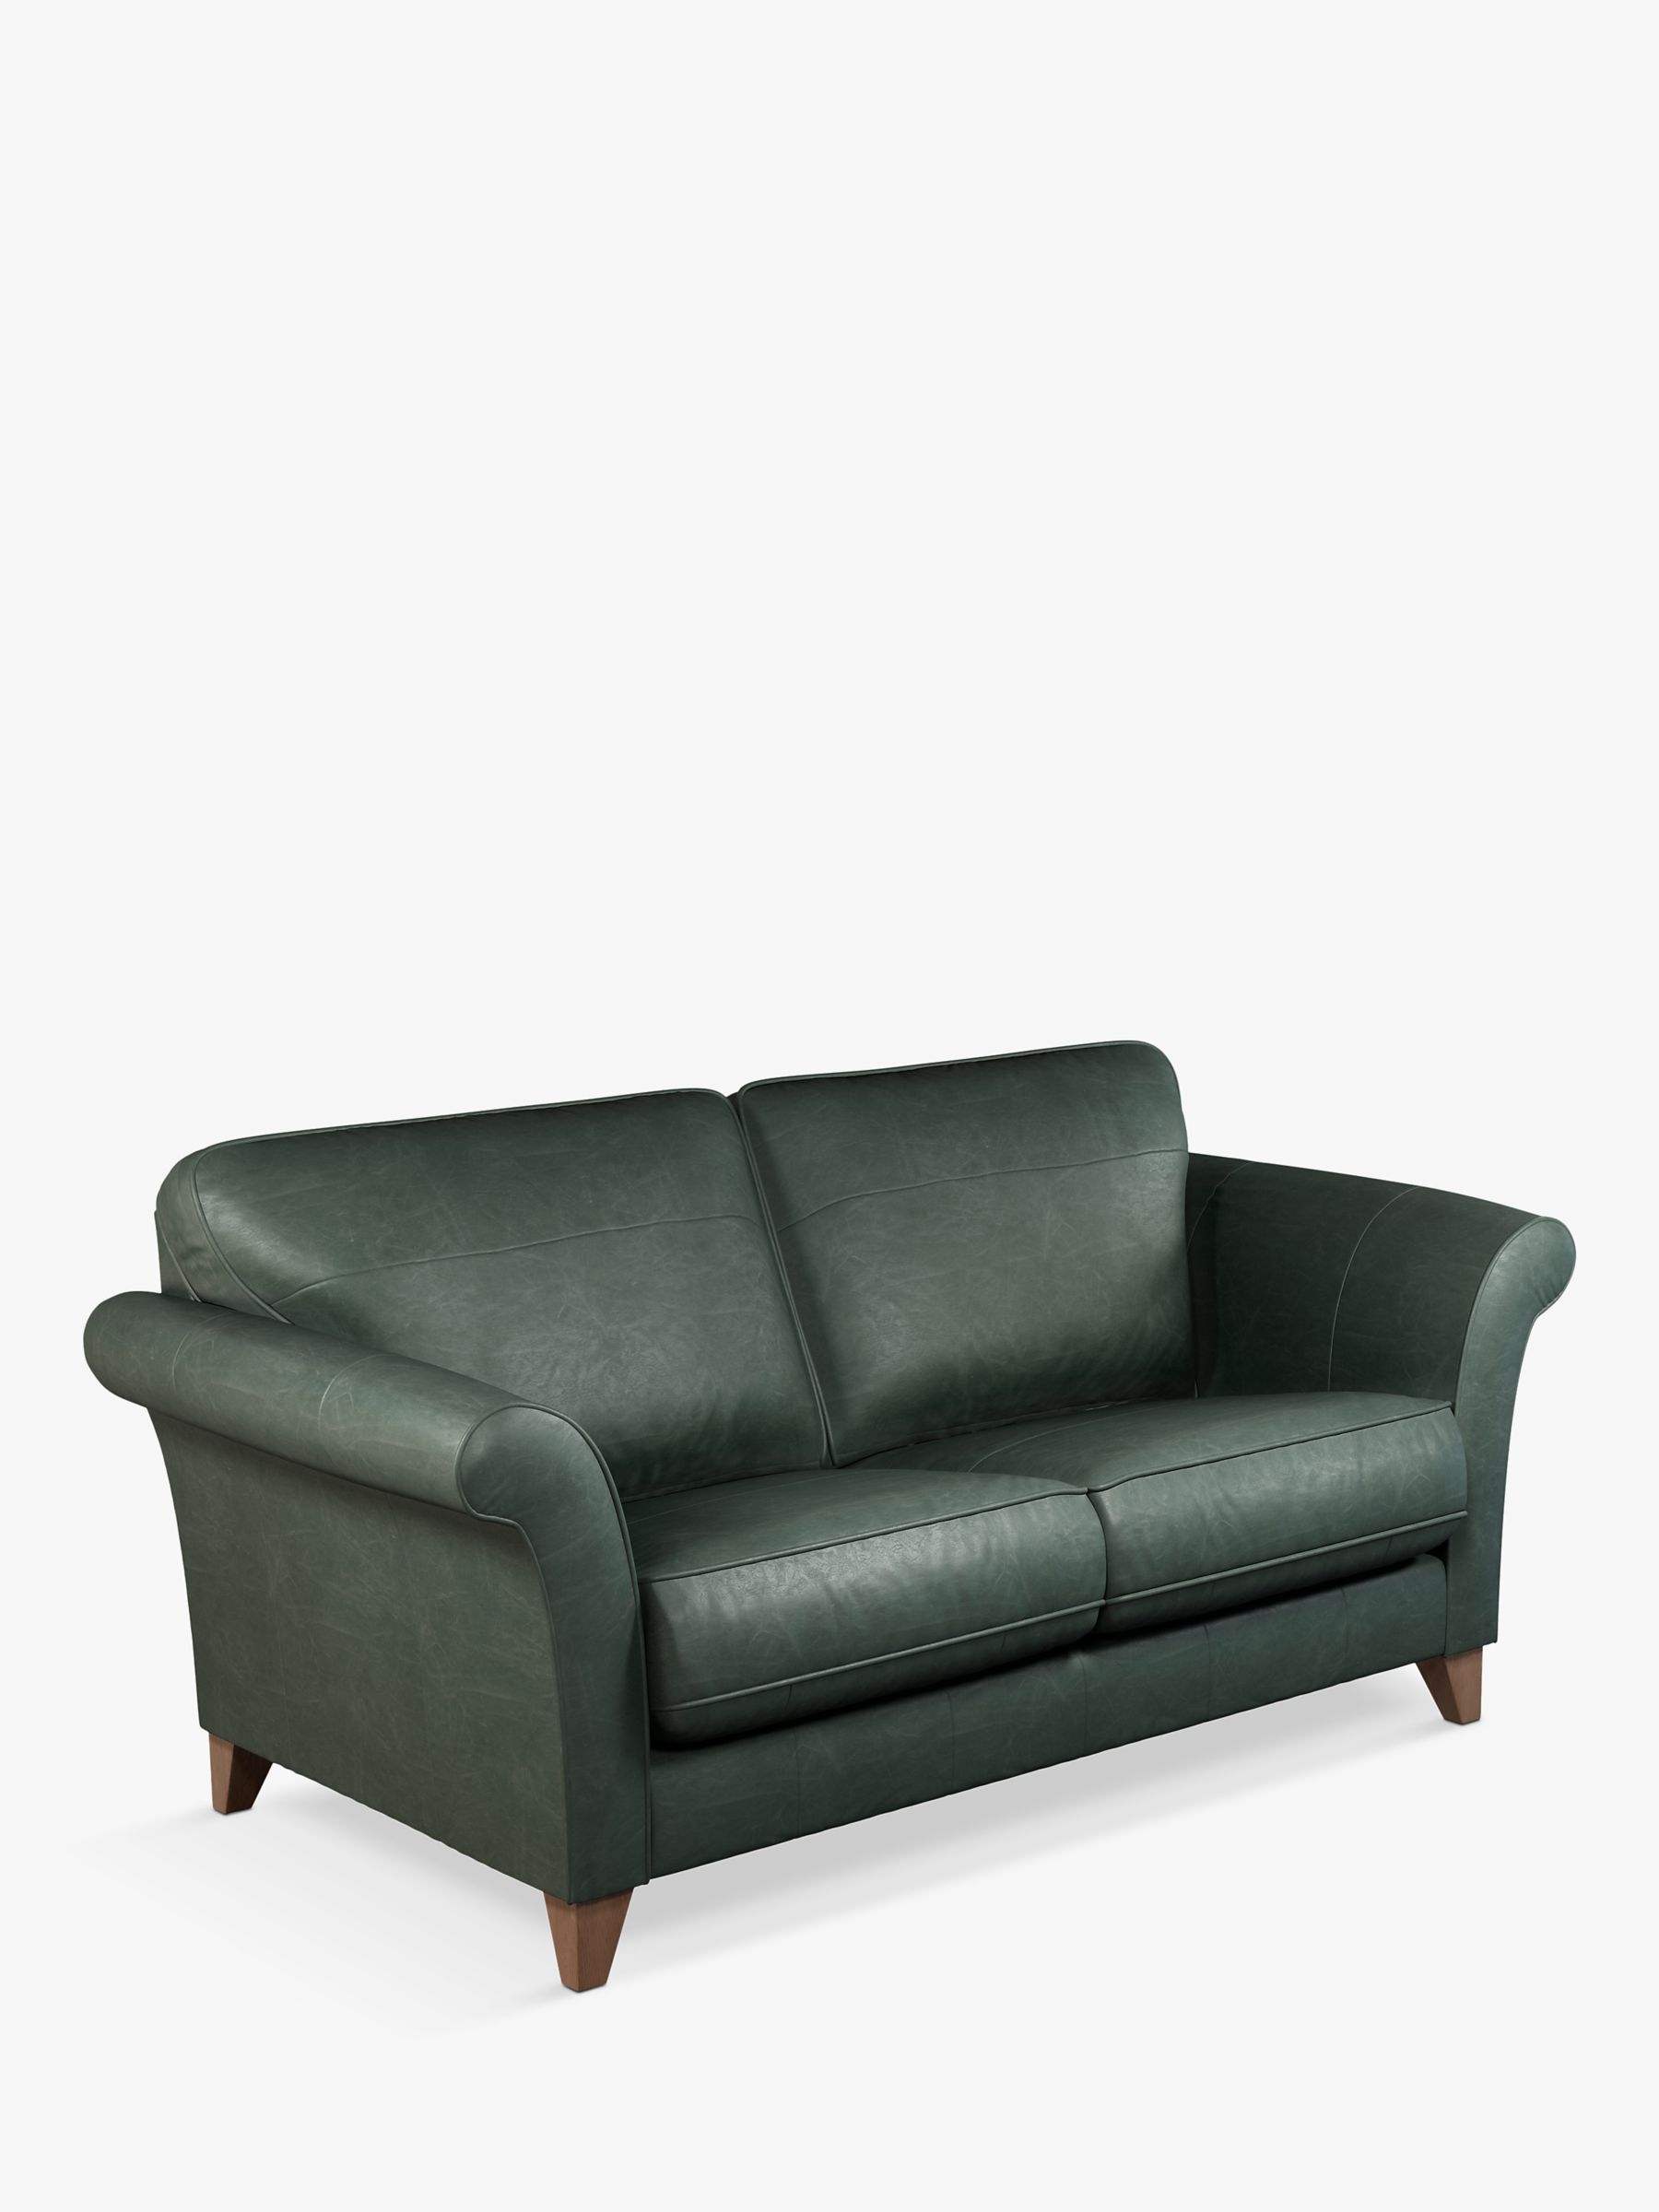 Charlotte Range, John Lewis Charlotte Large 3 Seater Leather Sofa, Dark Leg, Sellvagio Green